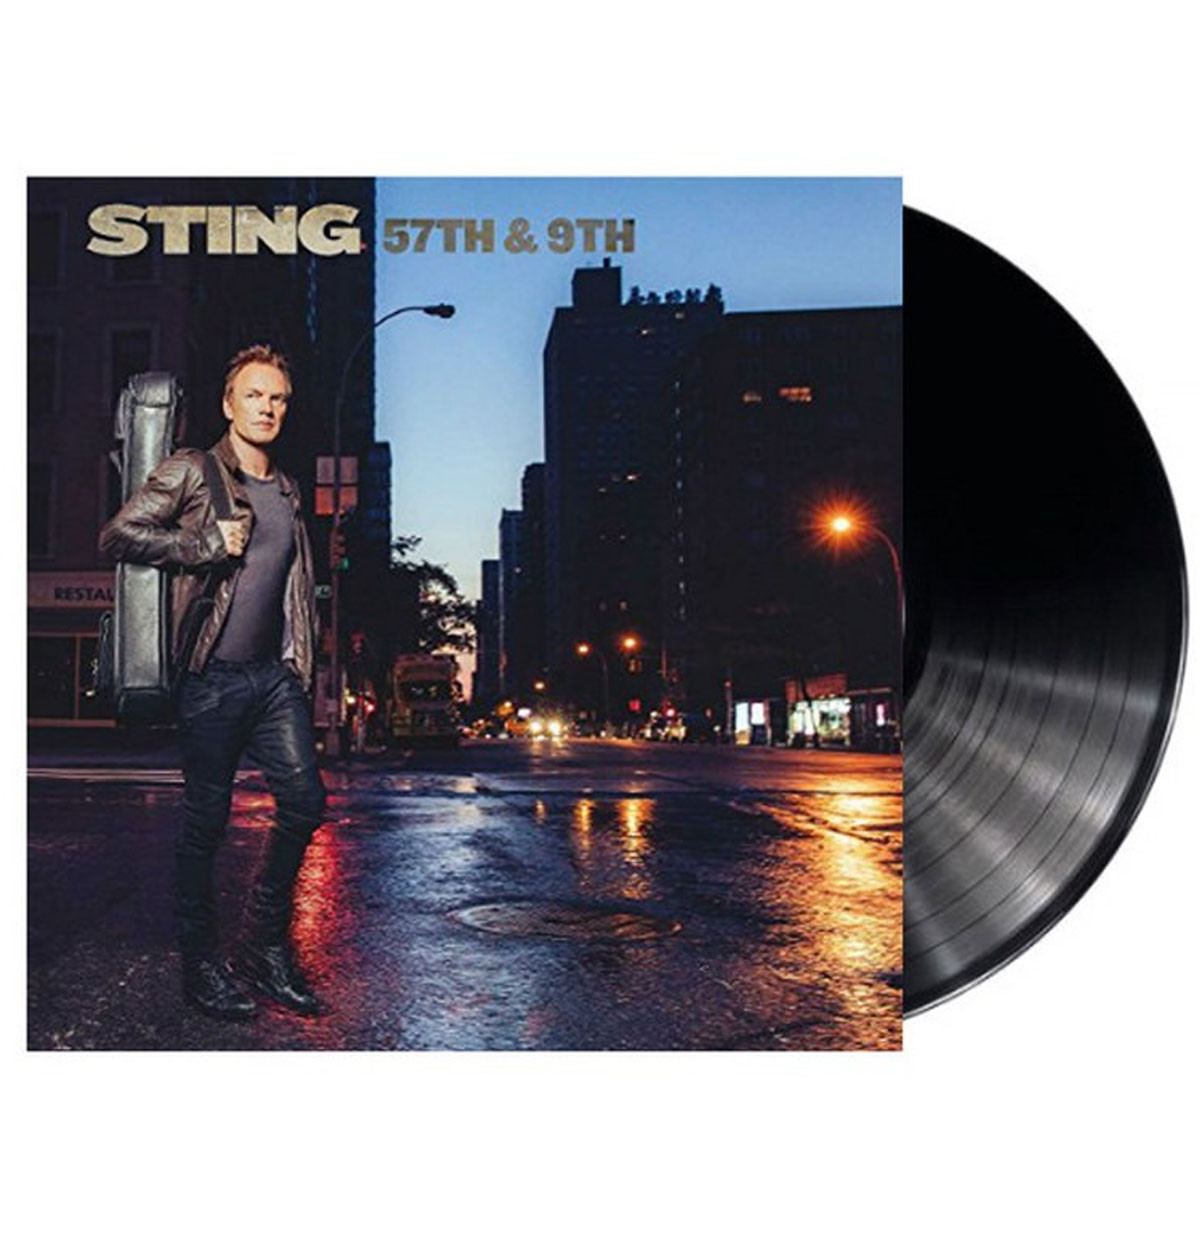 Sting - 57th & 9th LP